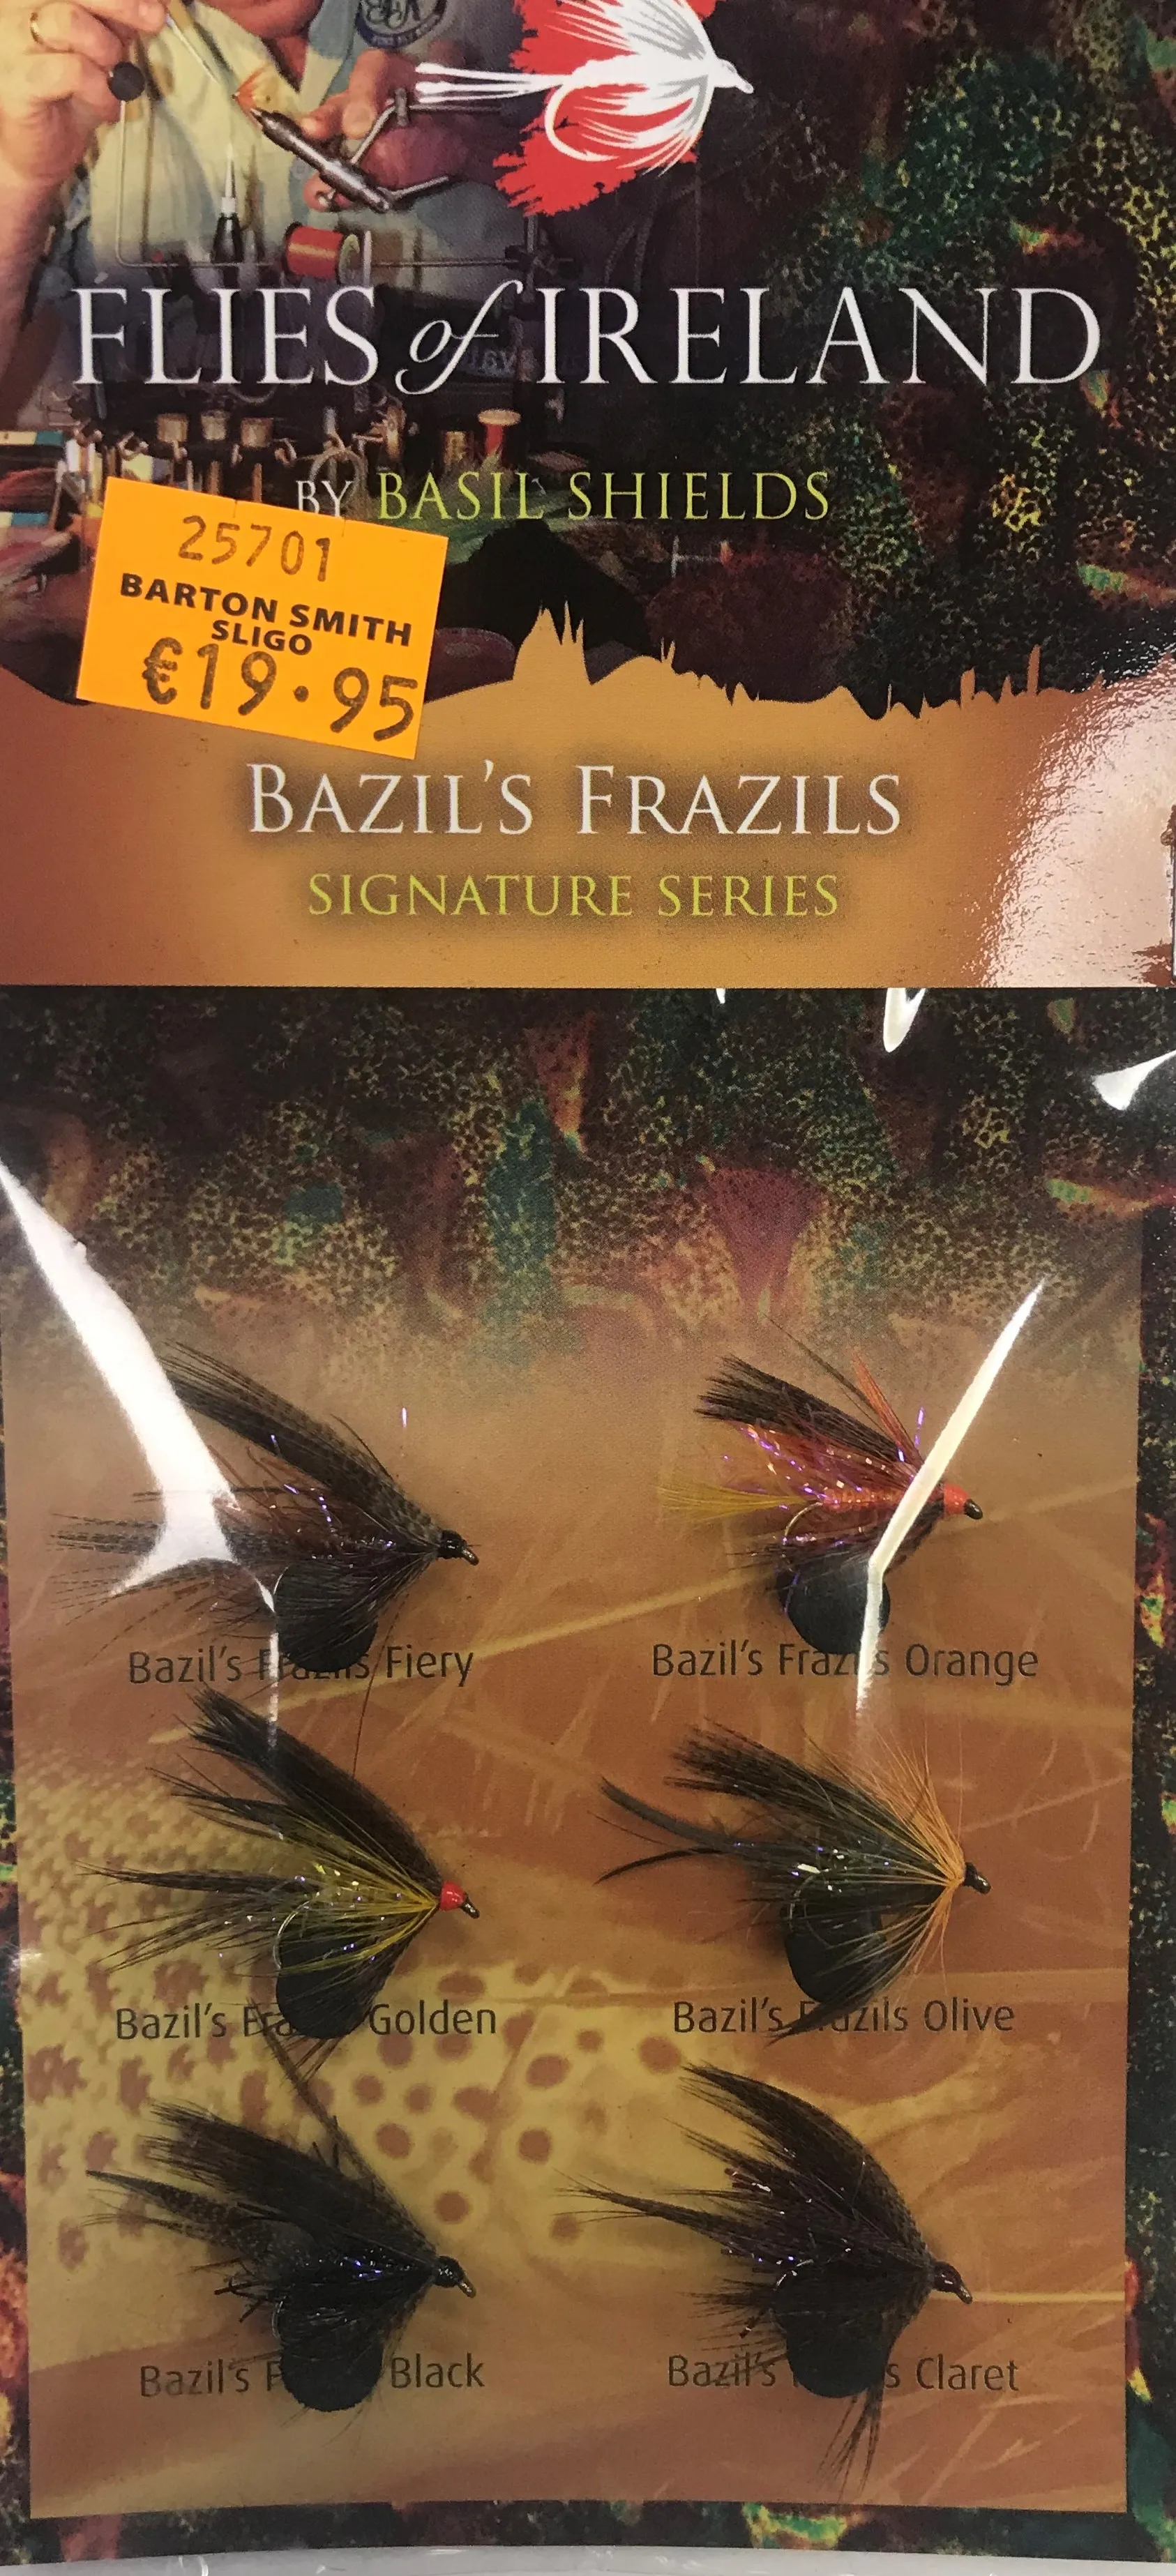 Flies of Ireland Bazil's Frazils Signature Series